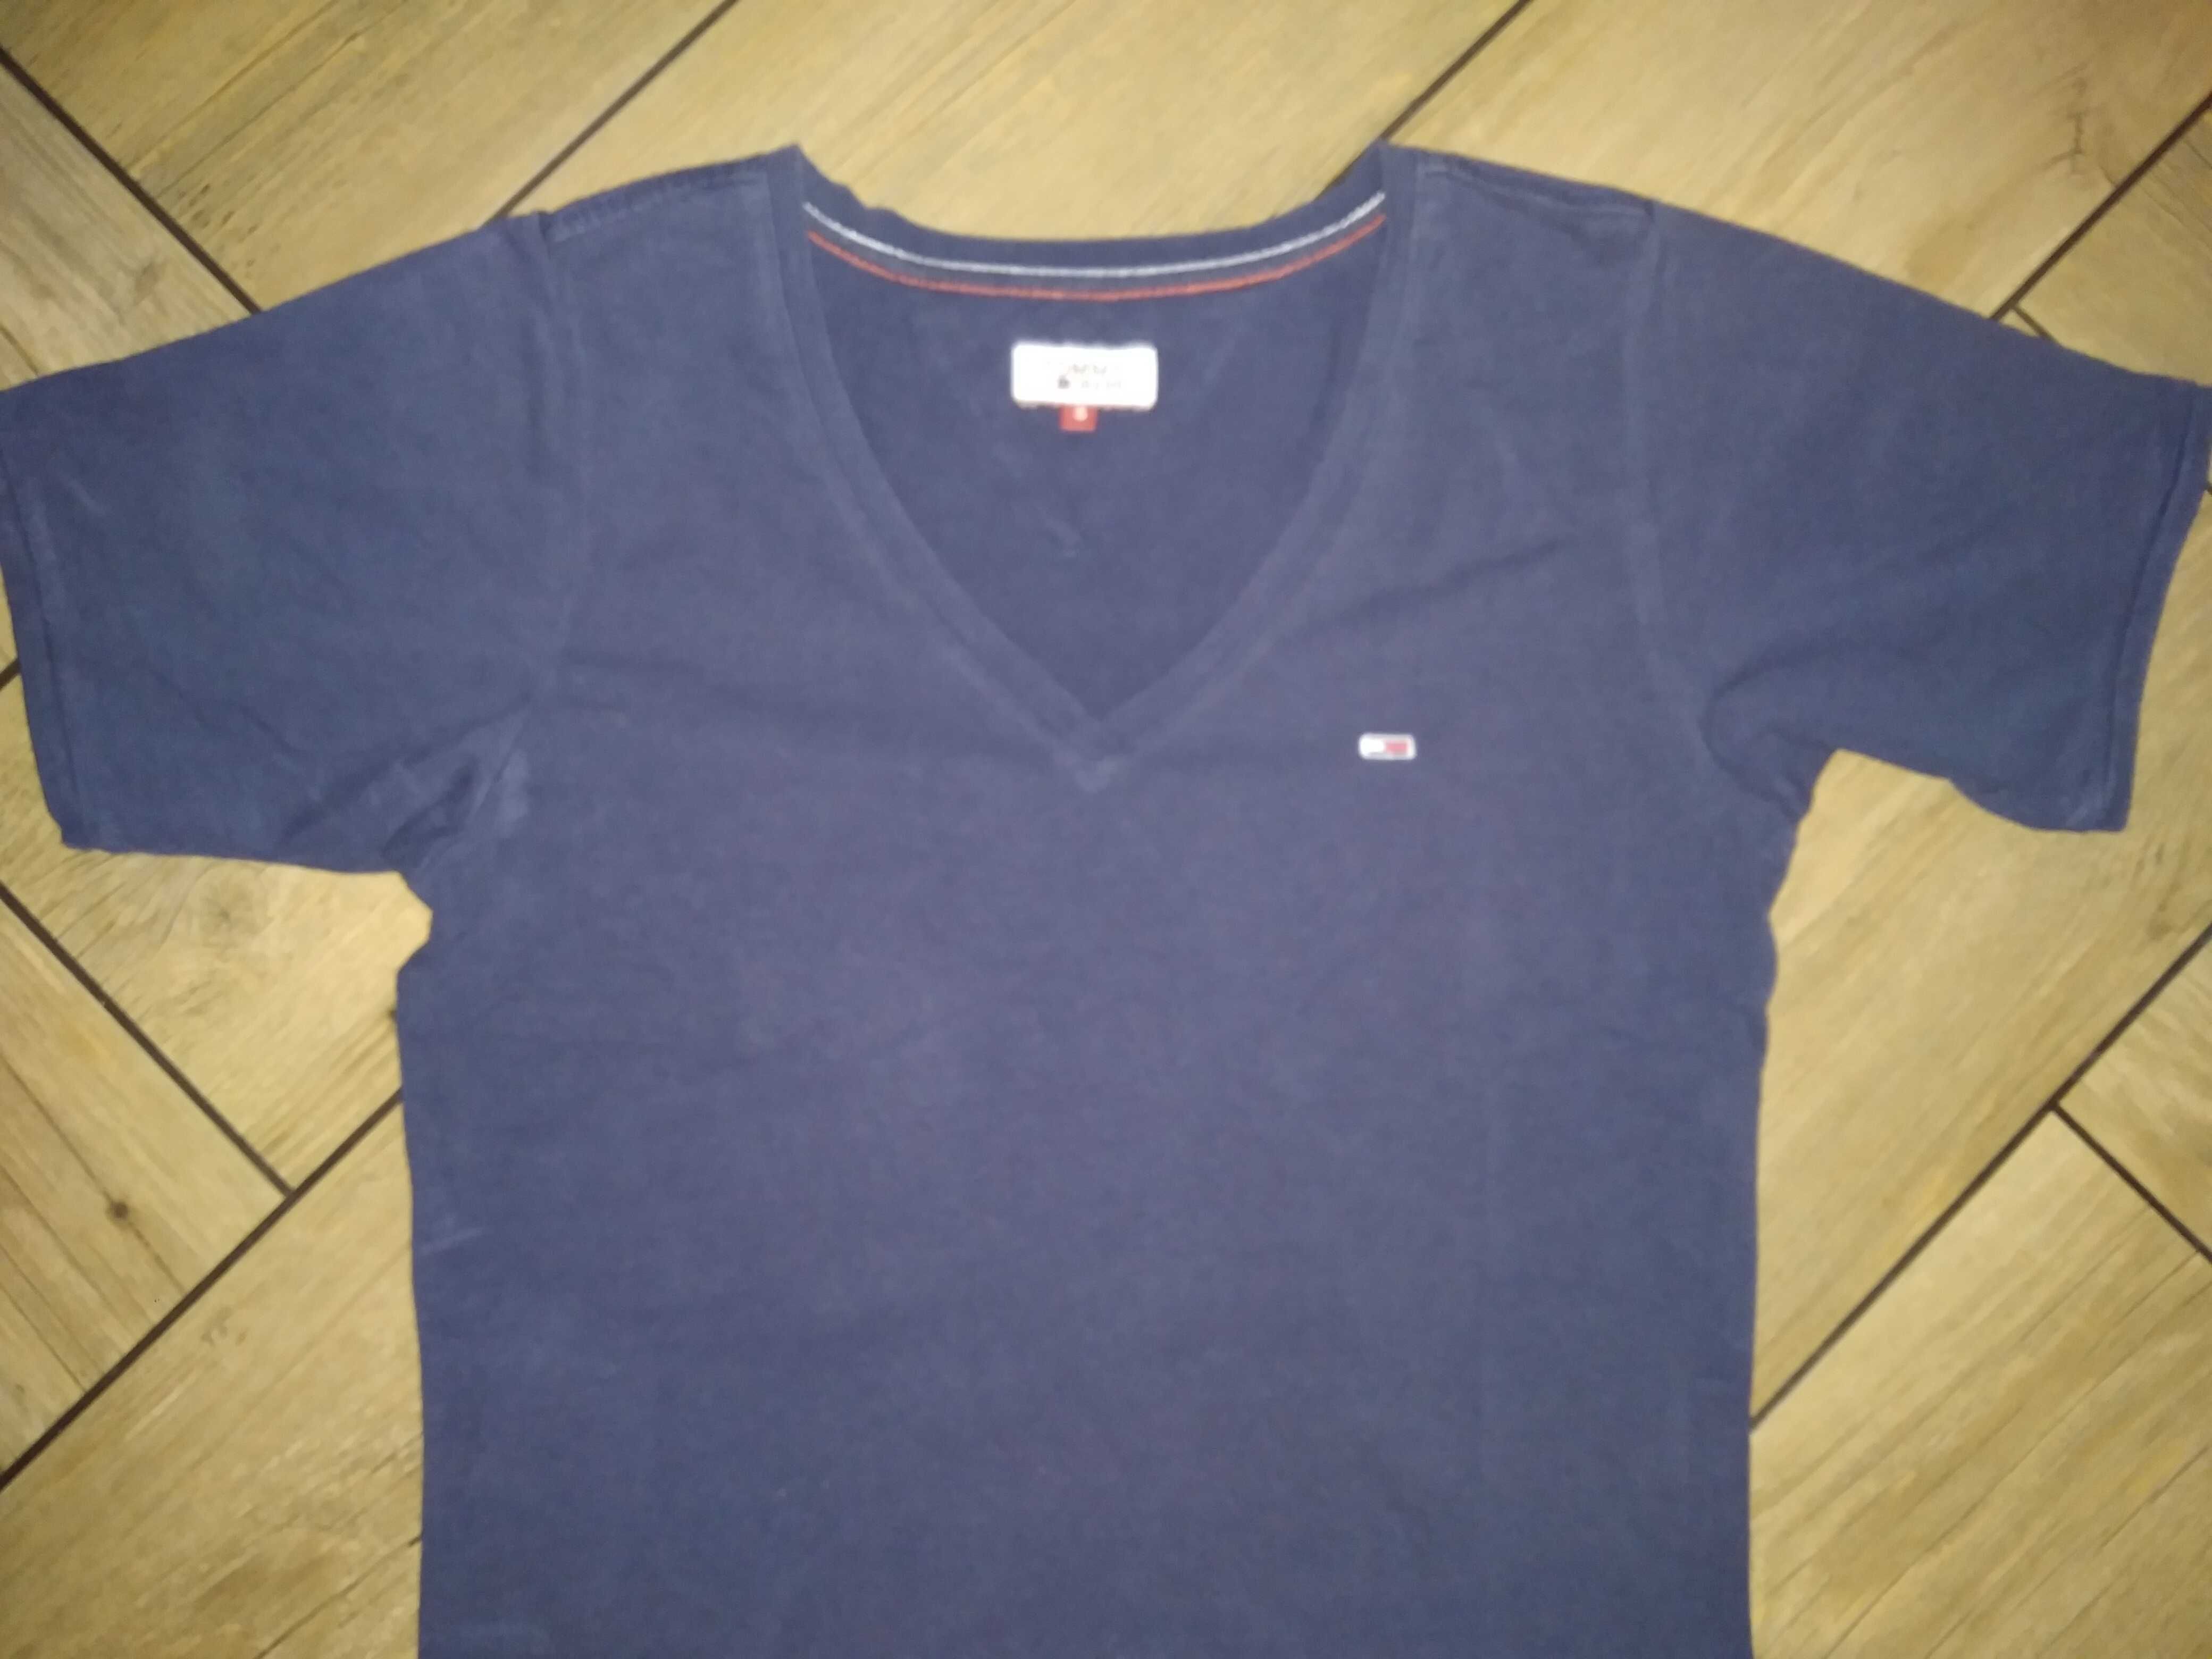 T-shirt rozmiar S Tommy Hilfiger, koszulka rozmiar S Tommy Hilfiger